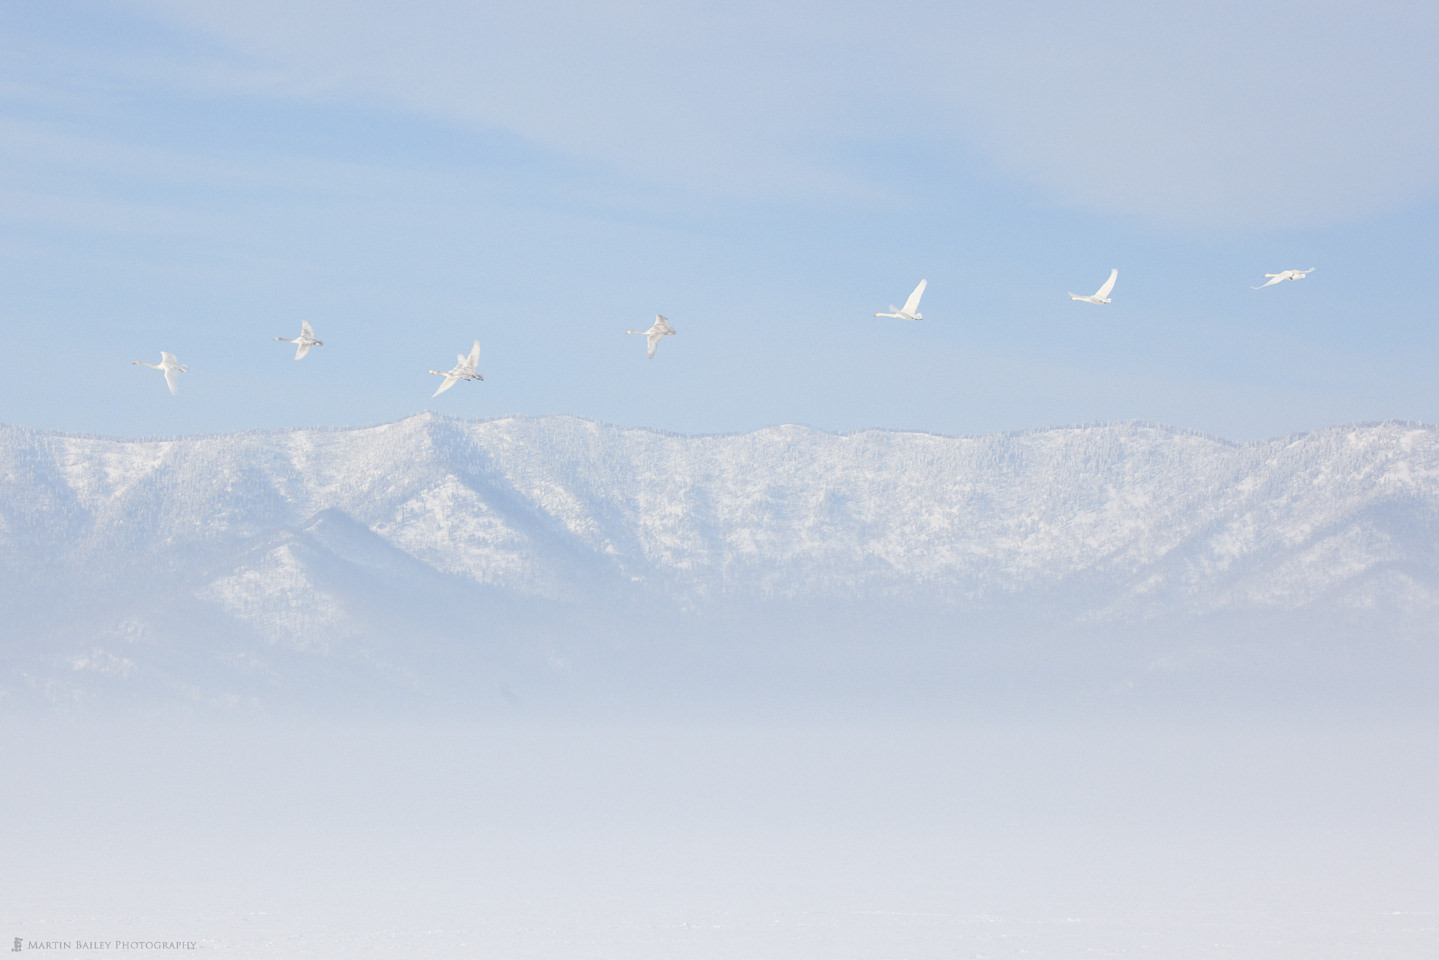 Eight Swans with Caldera Rim Mountains